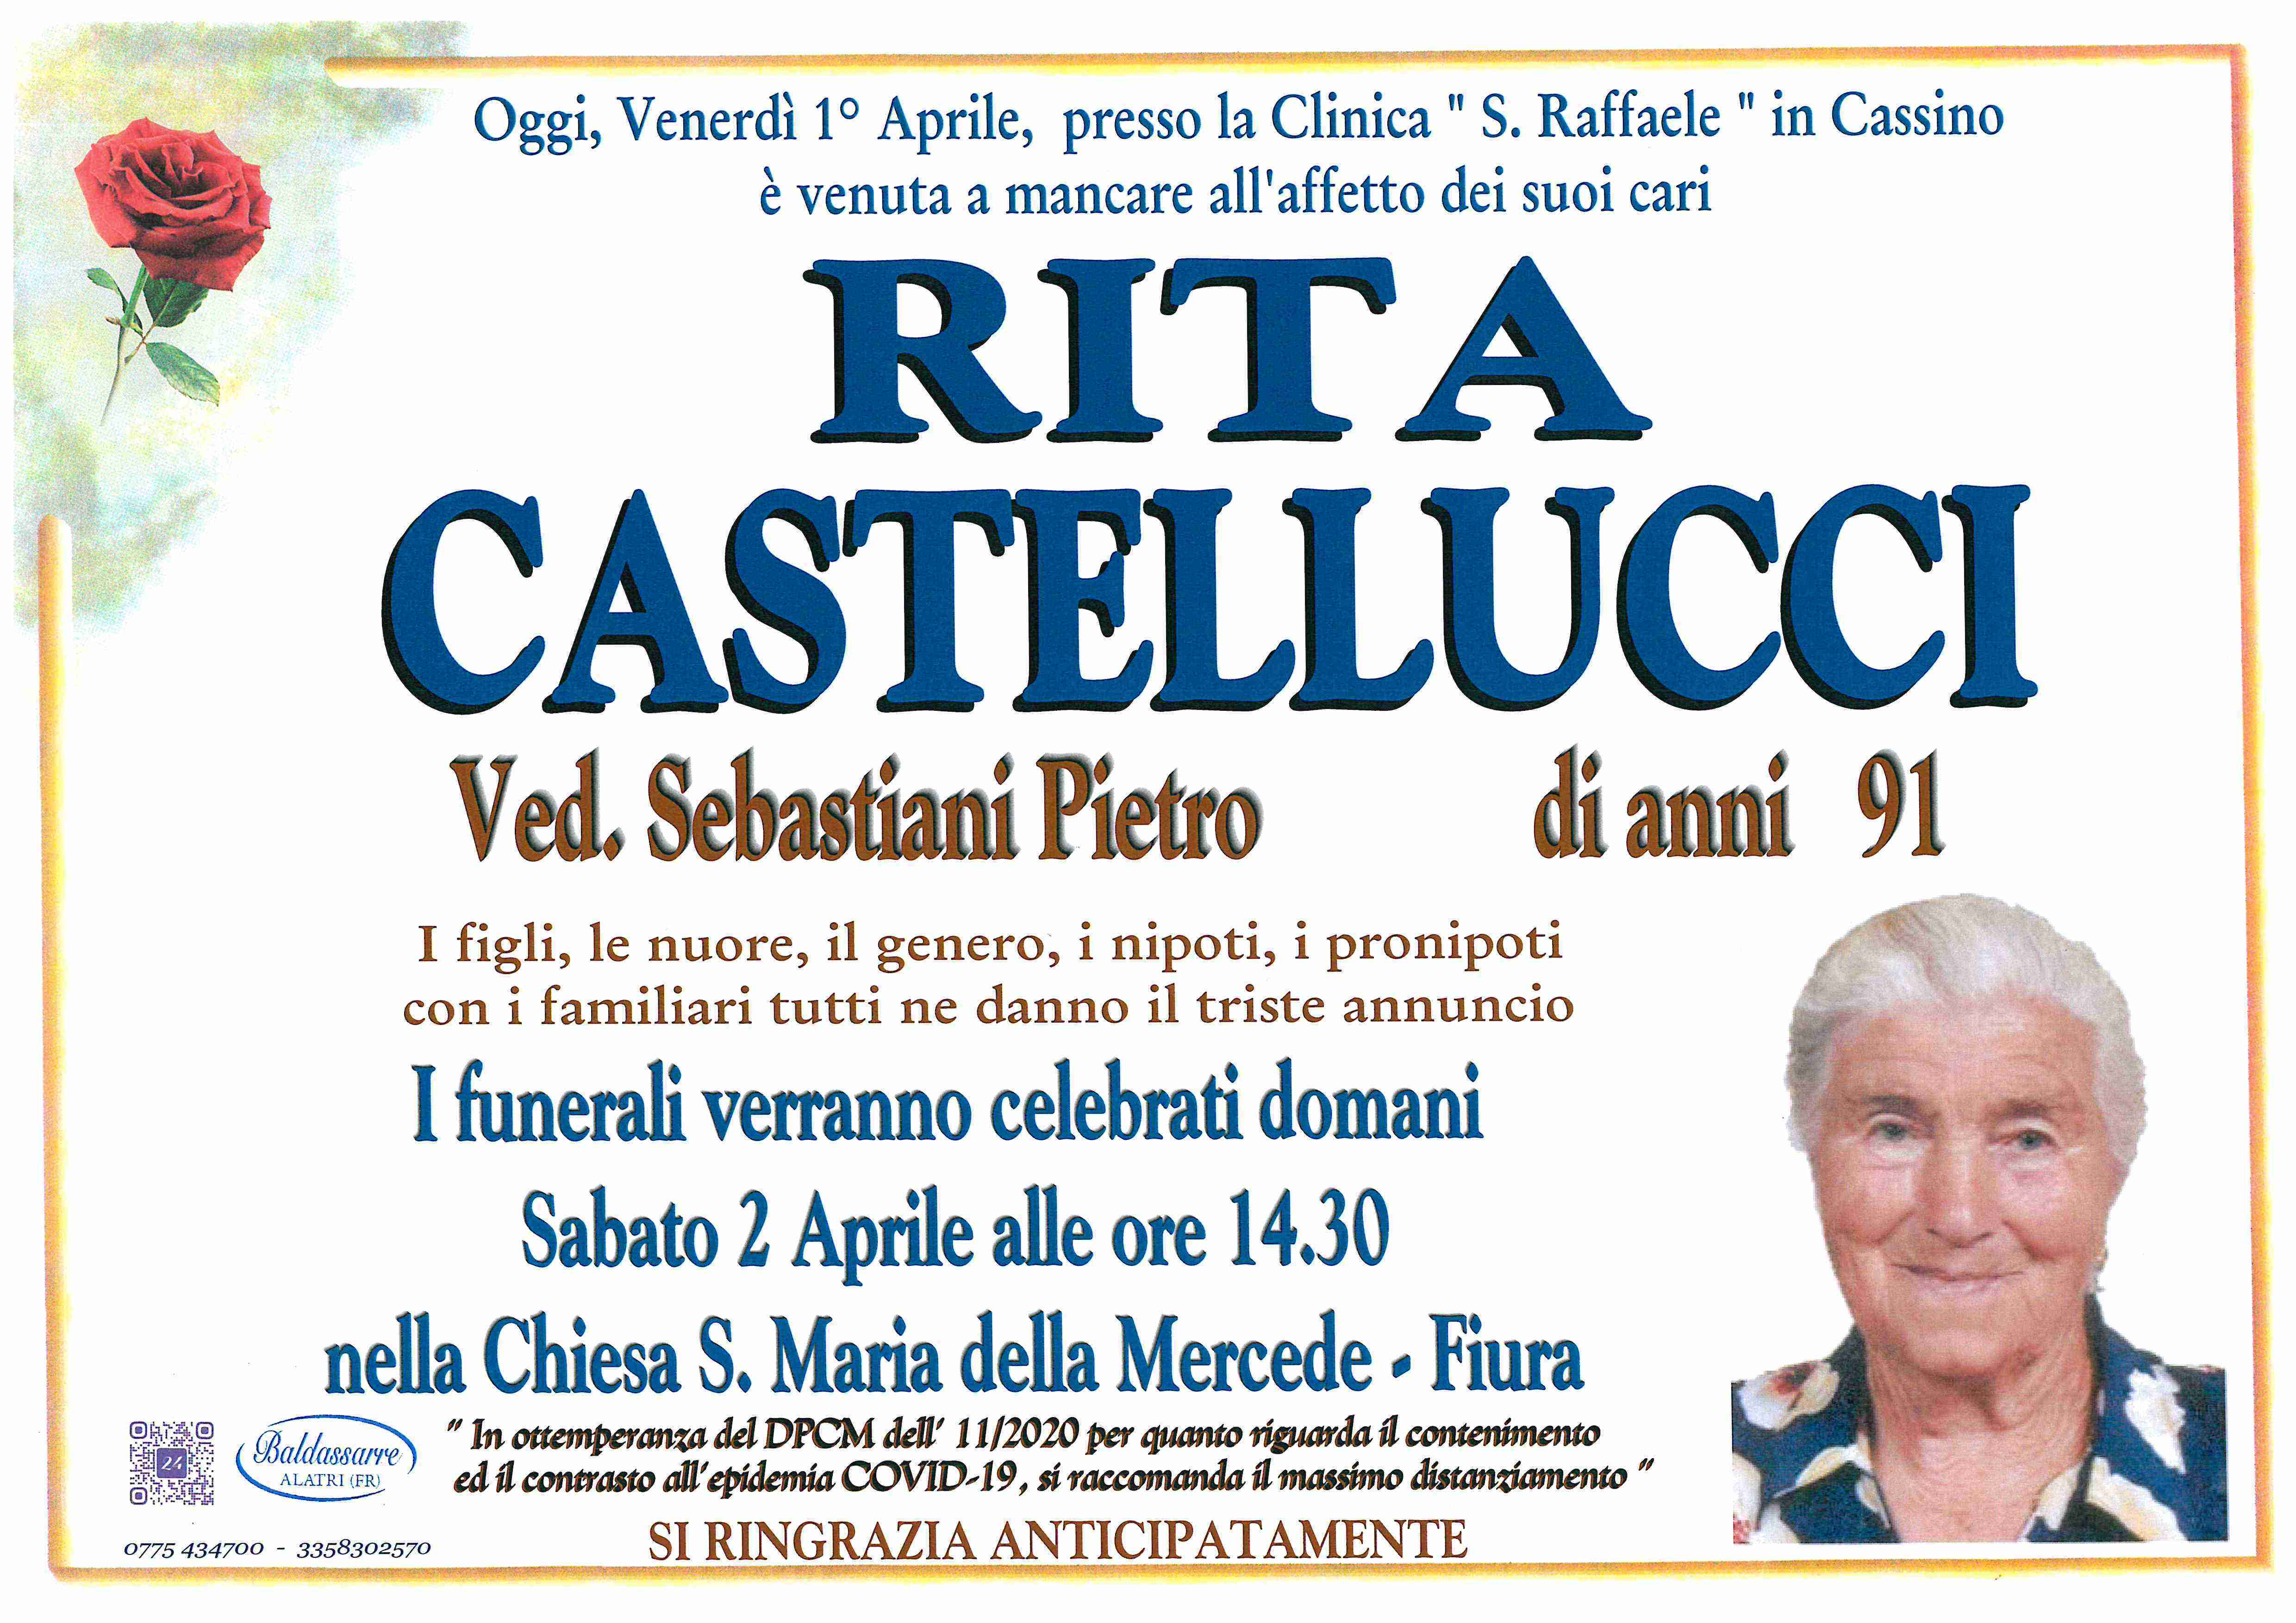 Rita Castellucci